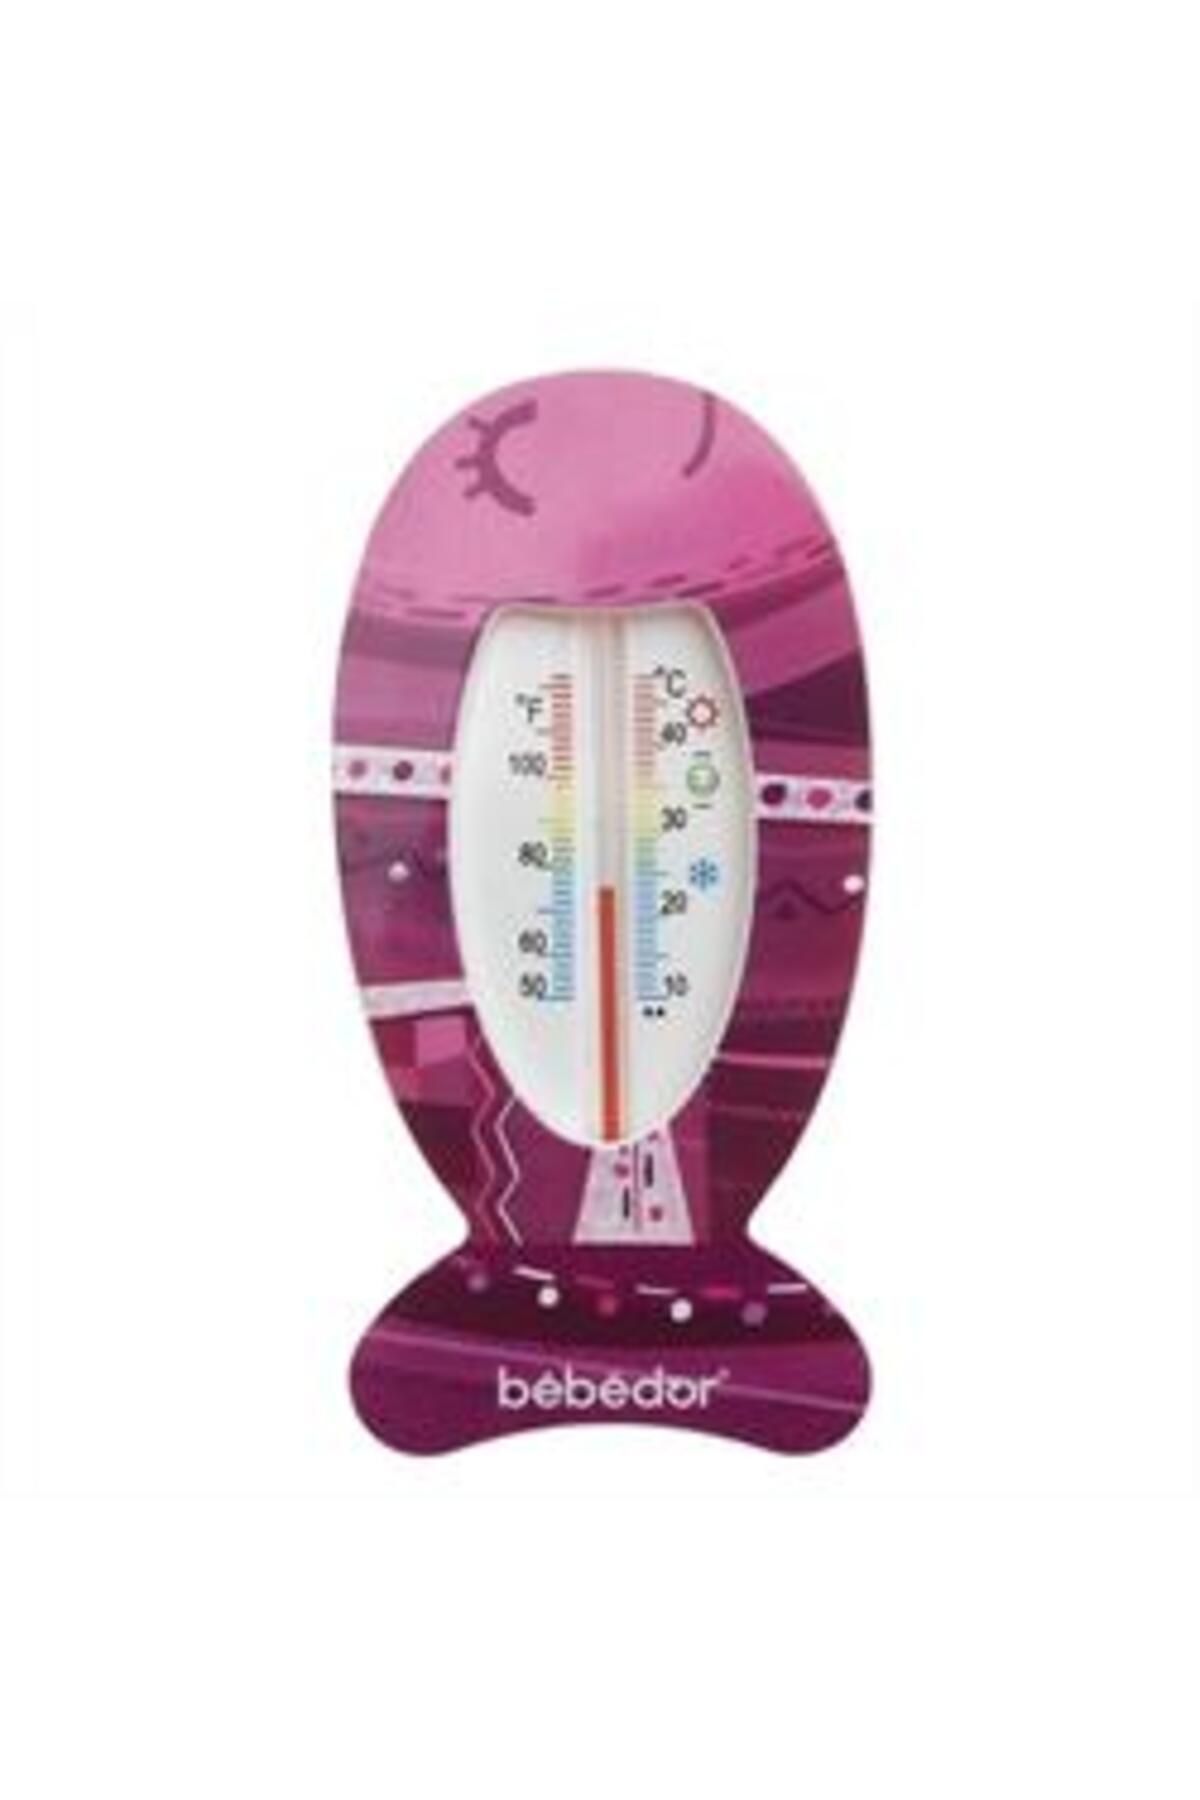 Bebedor Bebek Balık Banyo Termometresi ( 1 ADET )